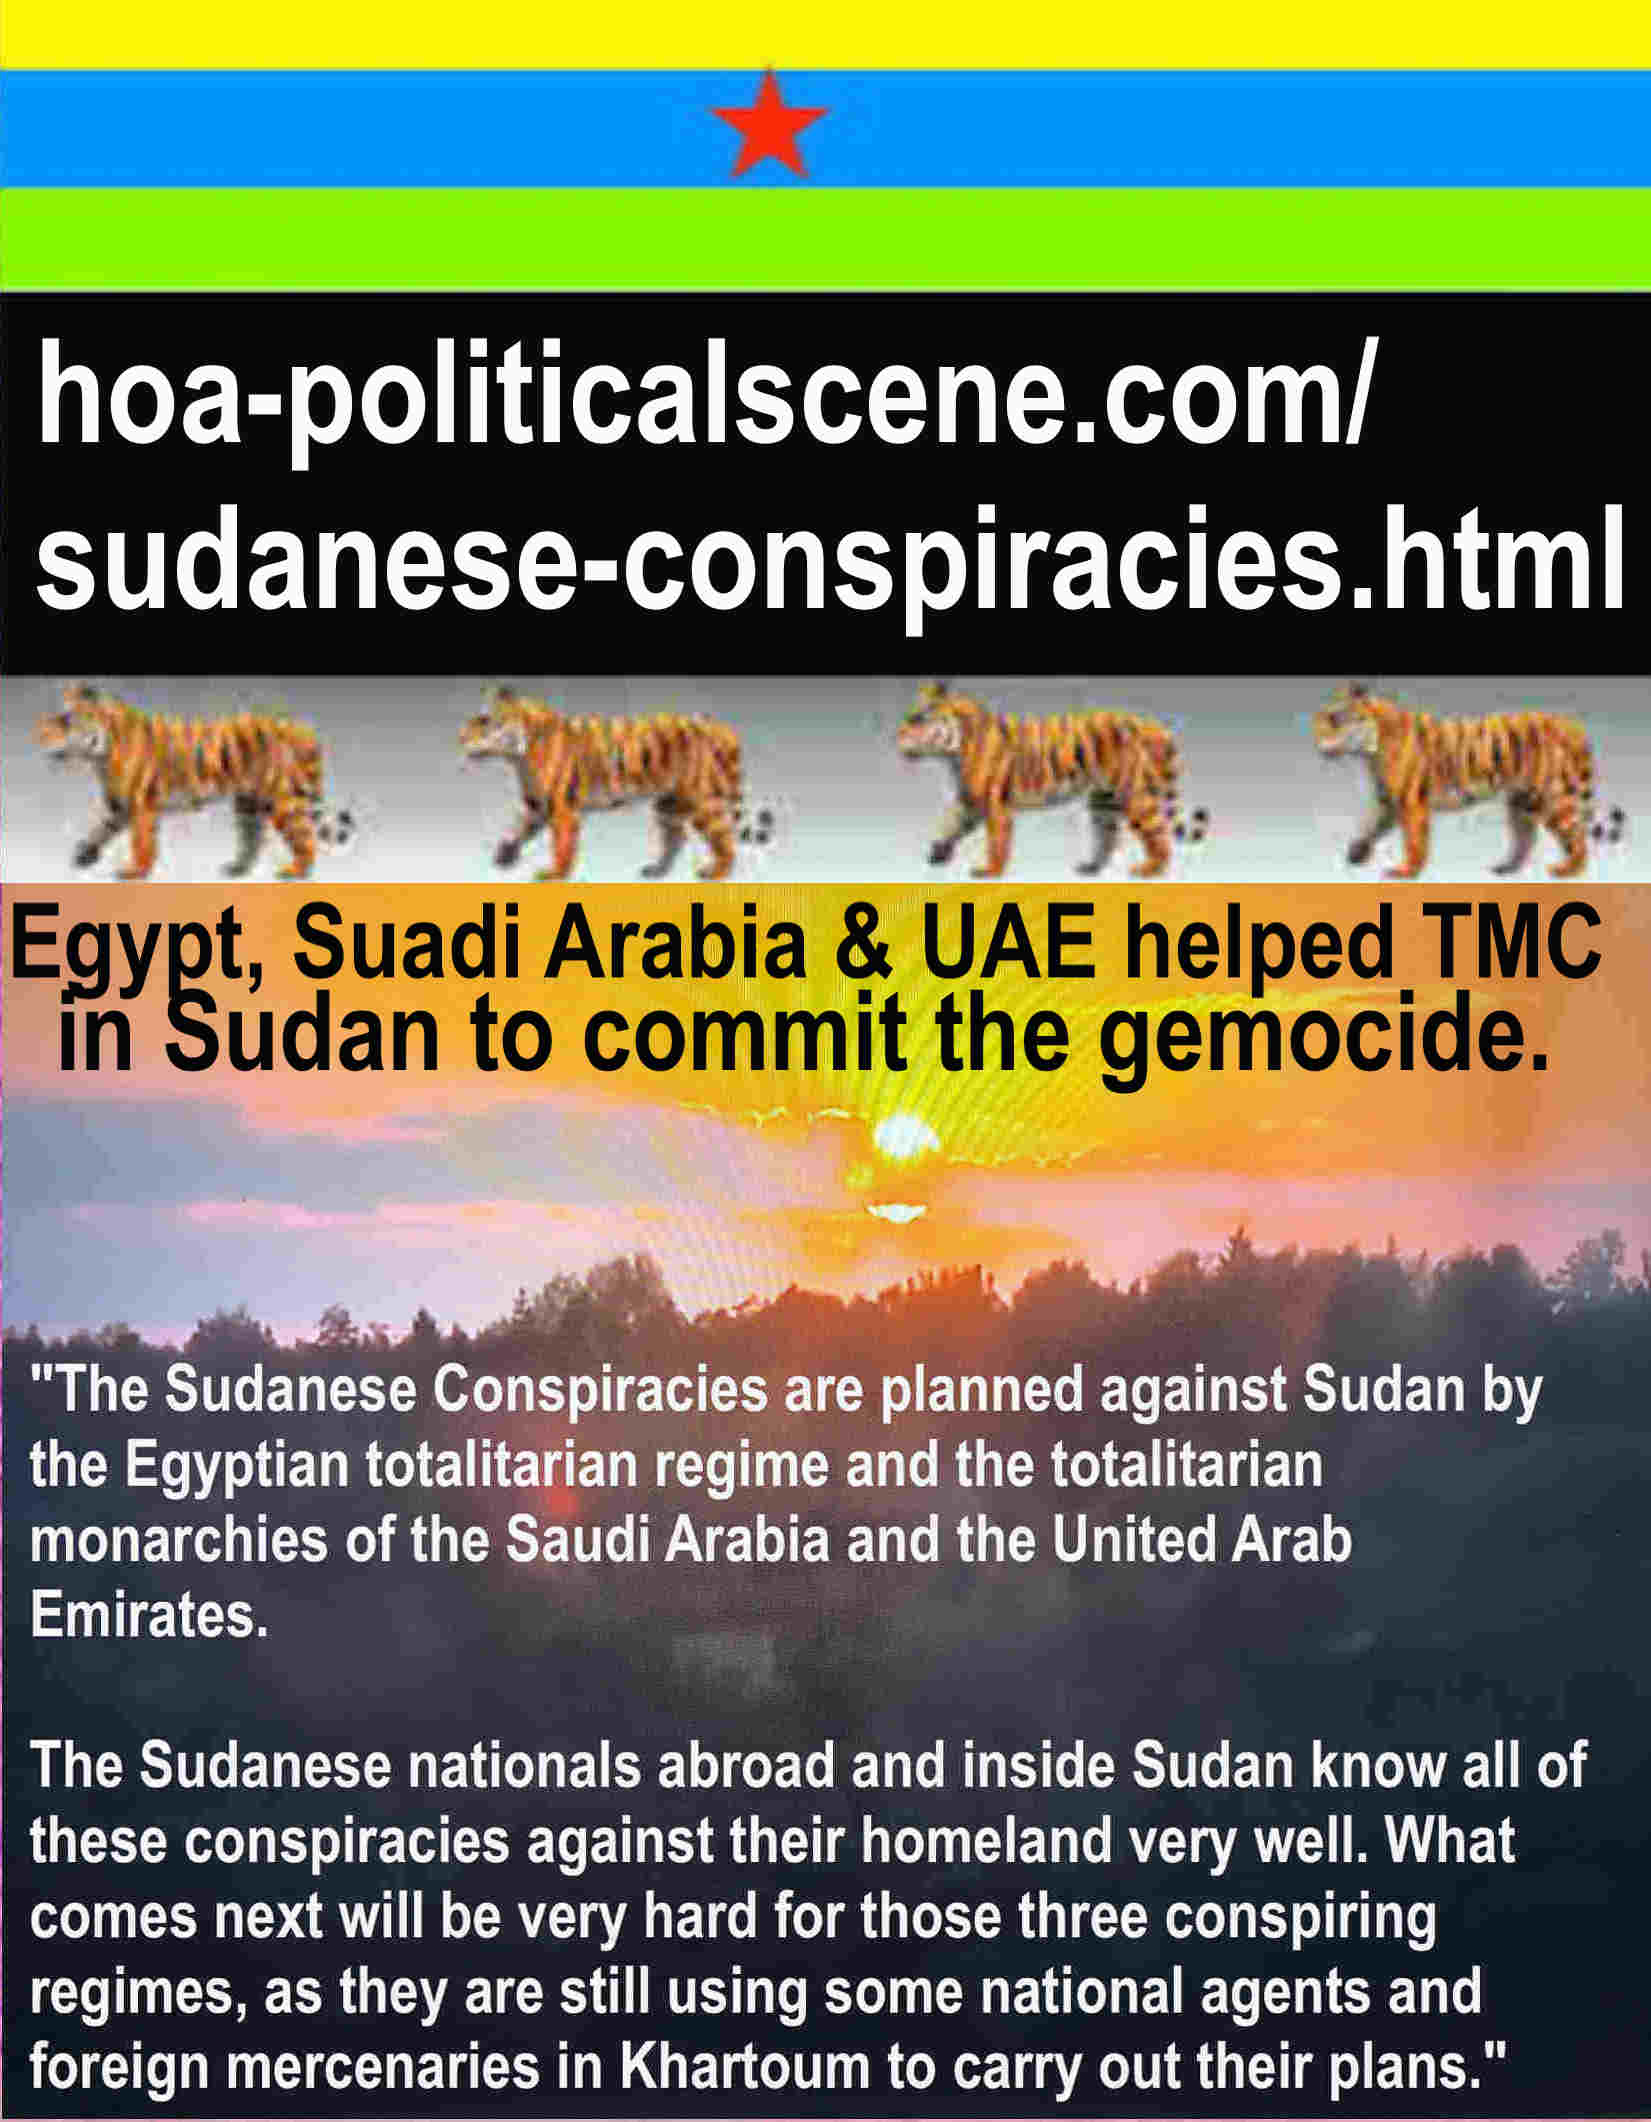 hoa-politicalscene.com/sekai-no-konton.html: Sekai no konton - 世界の混沌 - Japanese: 私はスーダン革命を、世俗国家を構築するための完全な道具的国家システムを提供する進歩的な革命にすることを計画しました。私がそれをしたのは、スーダン人が独裁者を倒そうとするあらゆる試みで失敗し続けていることを何年にもわたって学んだからです。